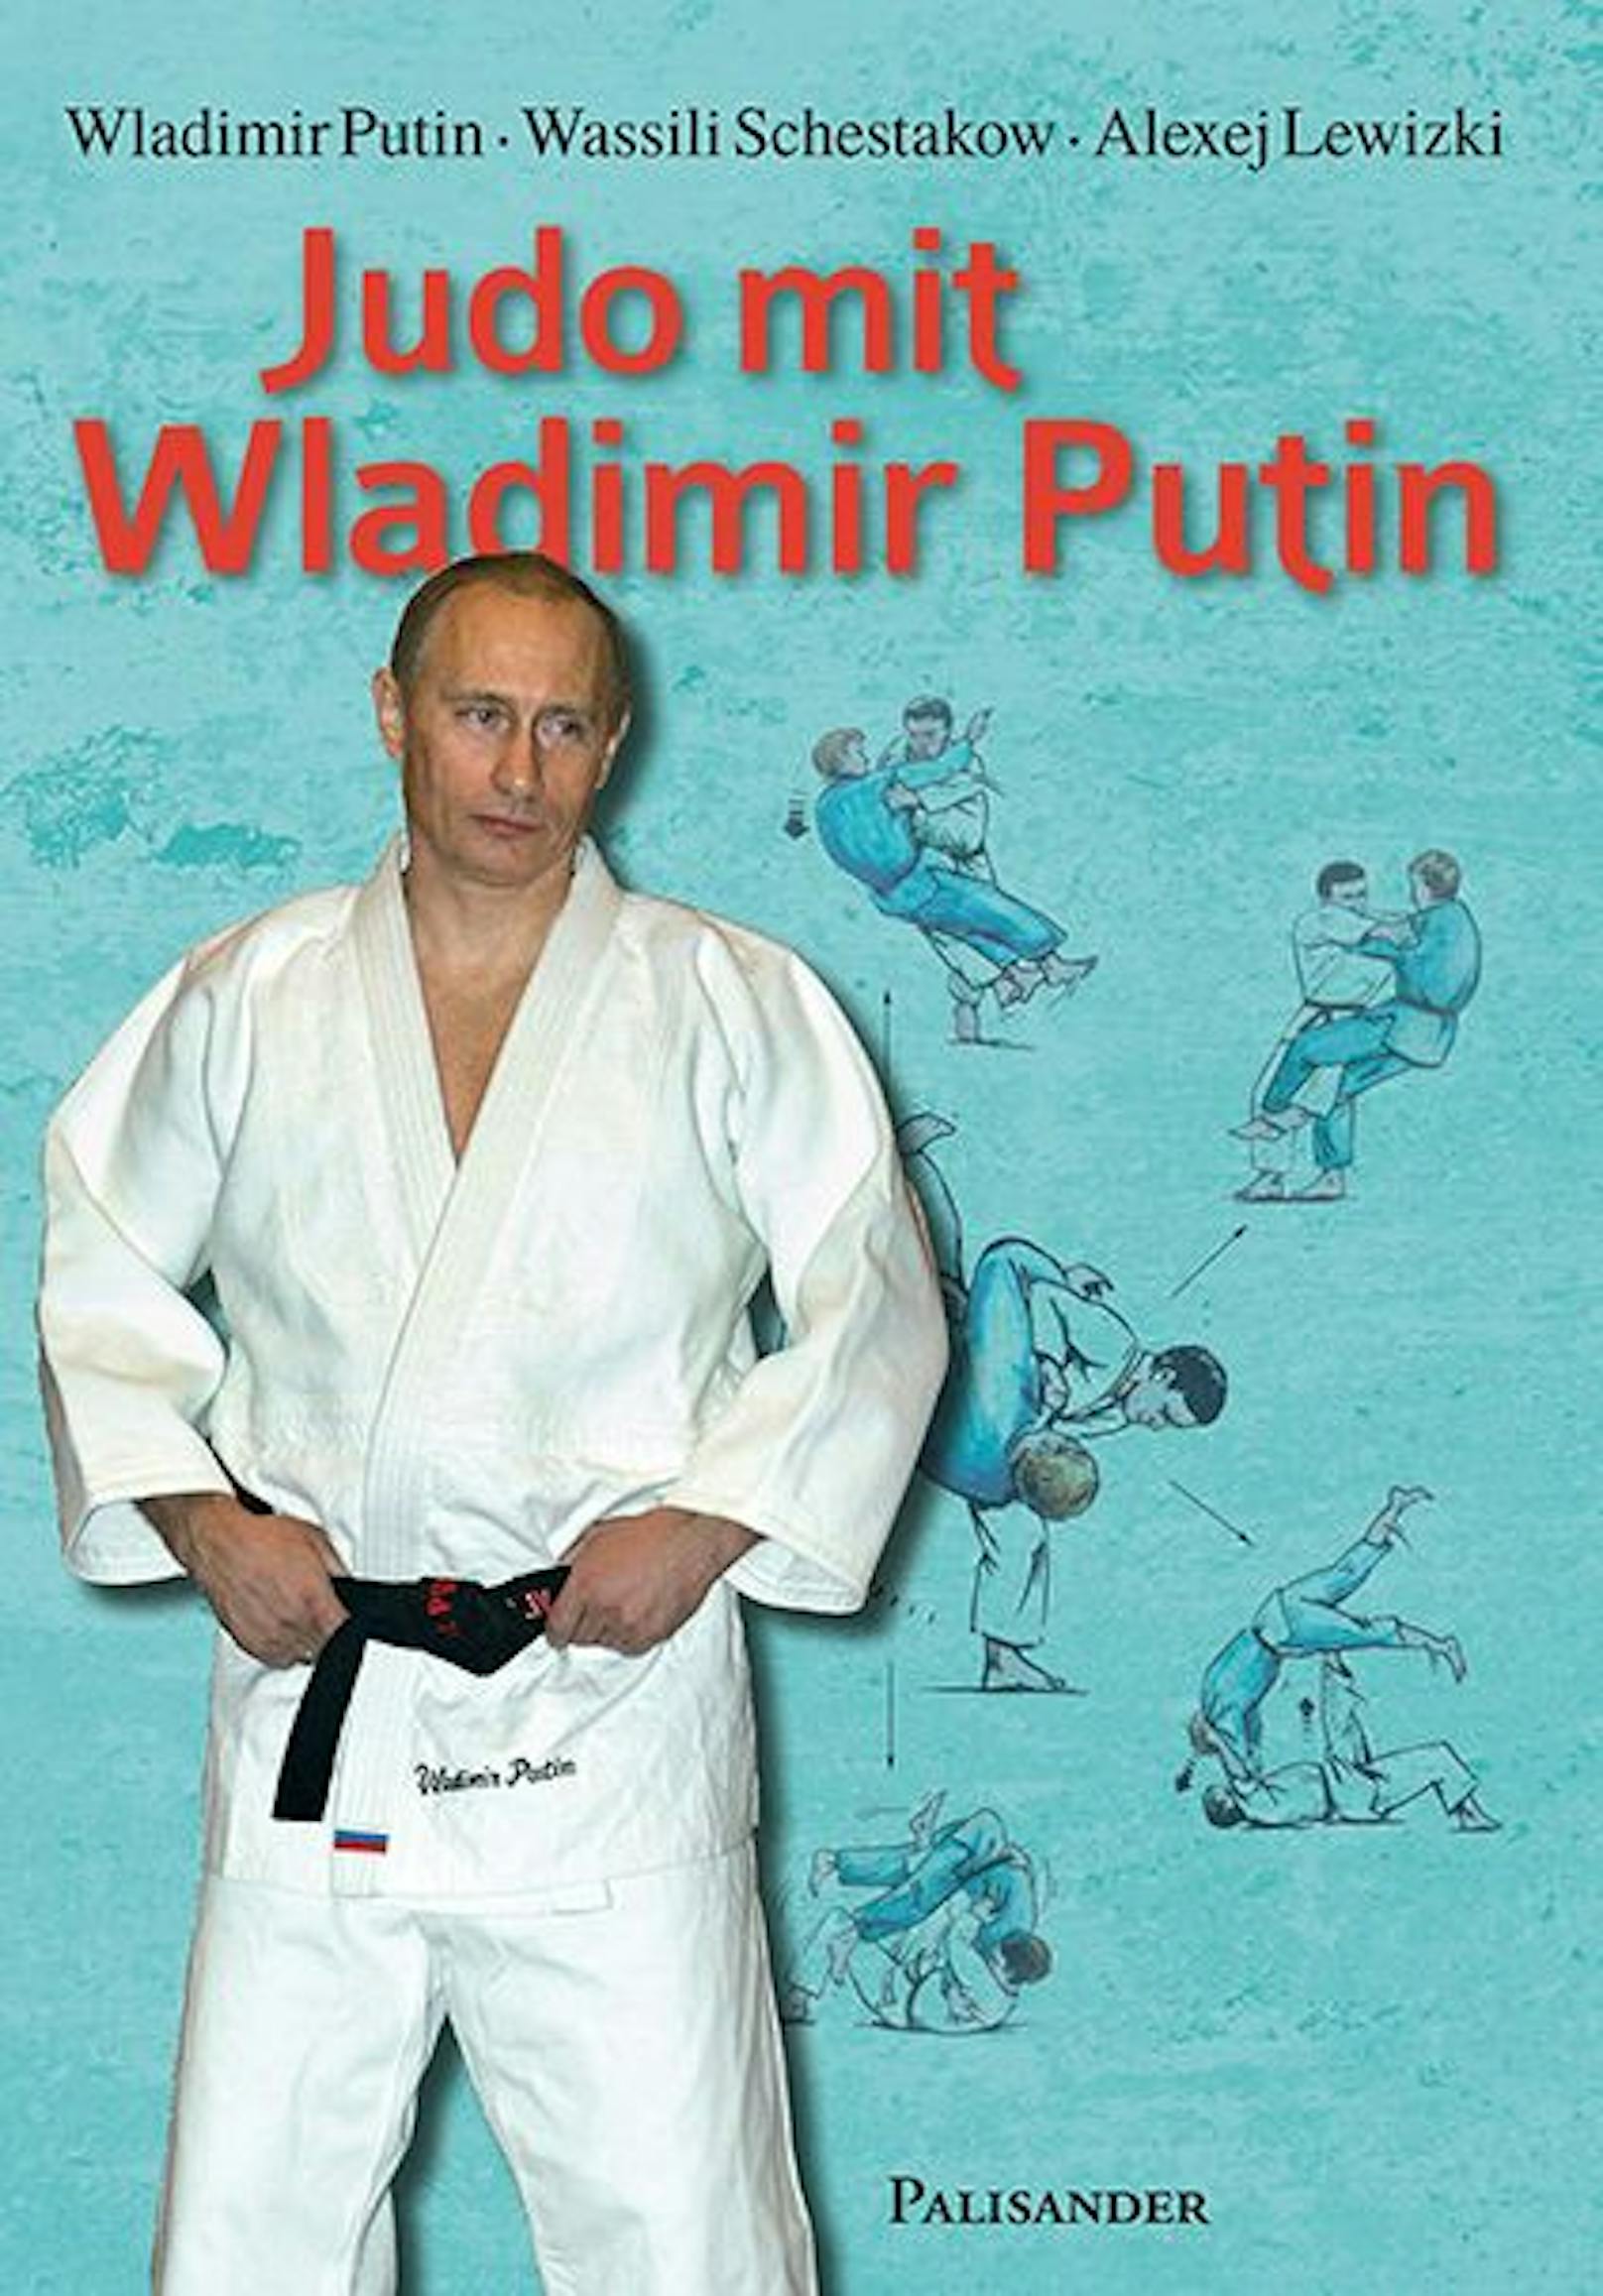 Der Judoka Wladimir Putin.&nbsp;